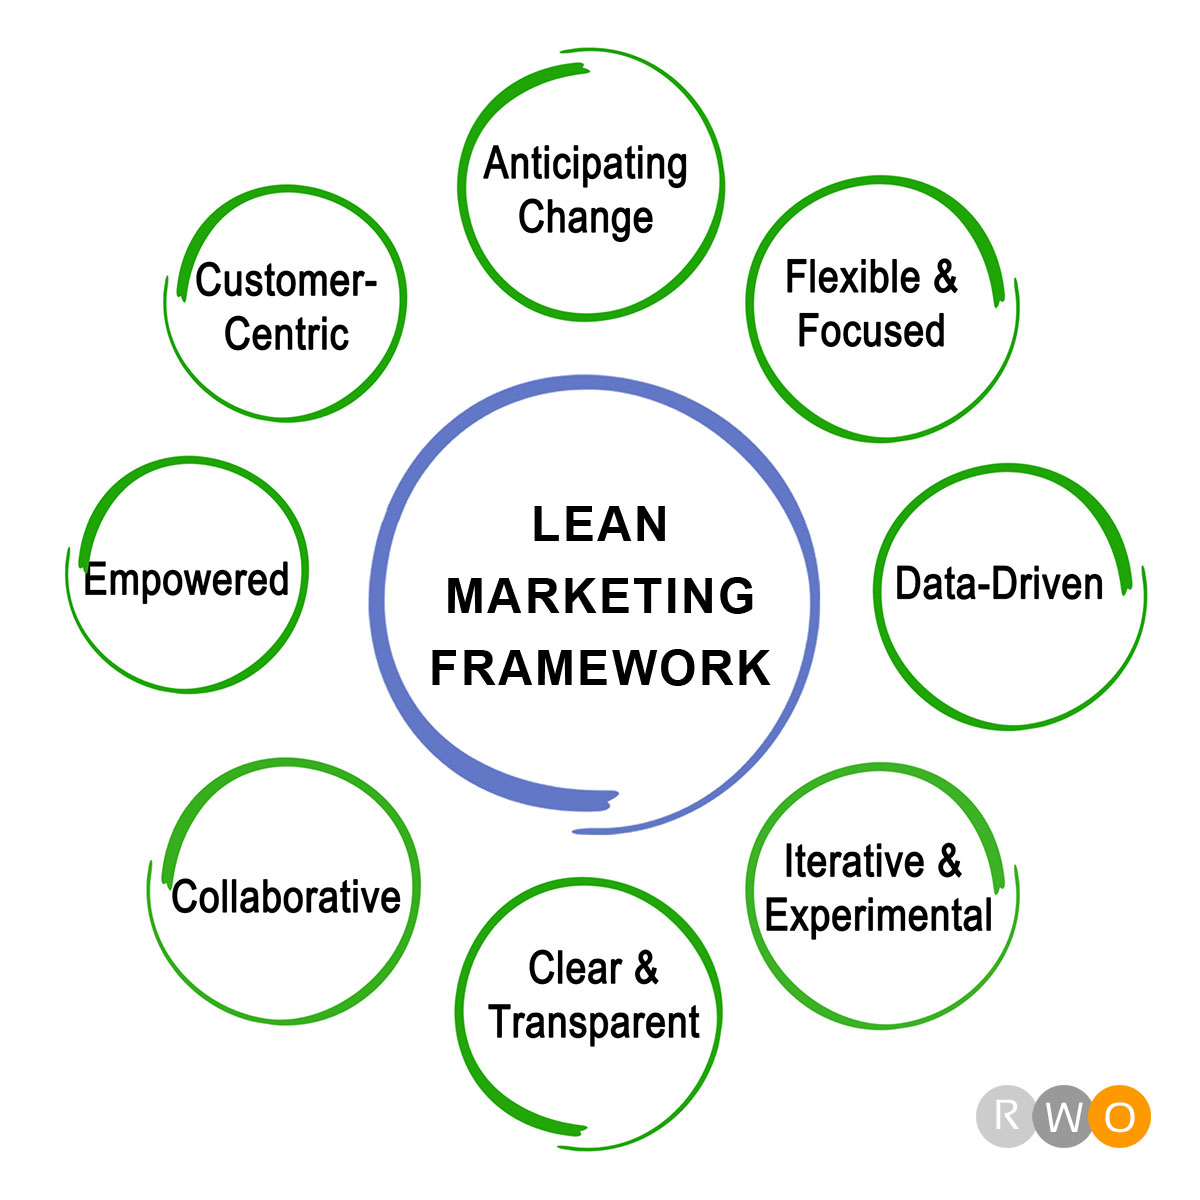 Circular drawing of lean marketing framework elements